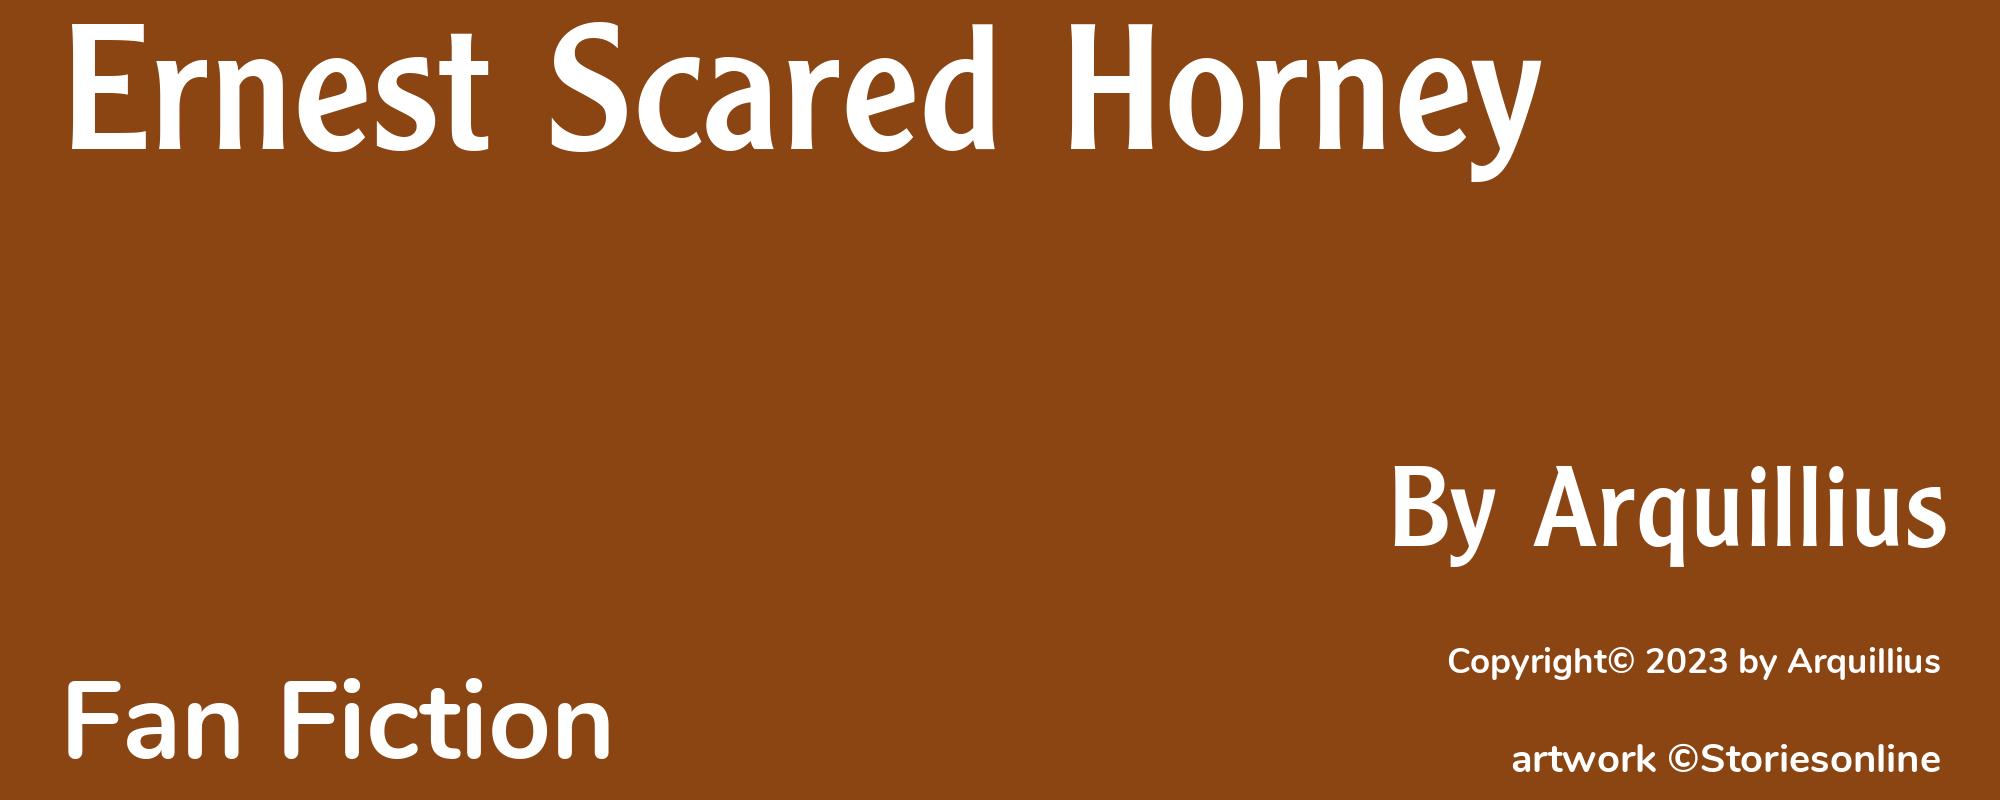 Ernest Scared Horney - Cover